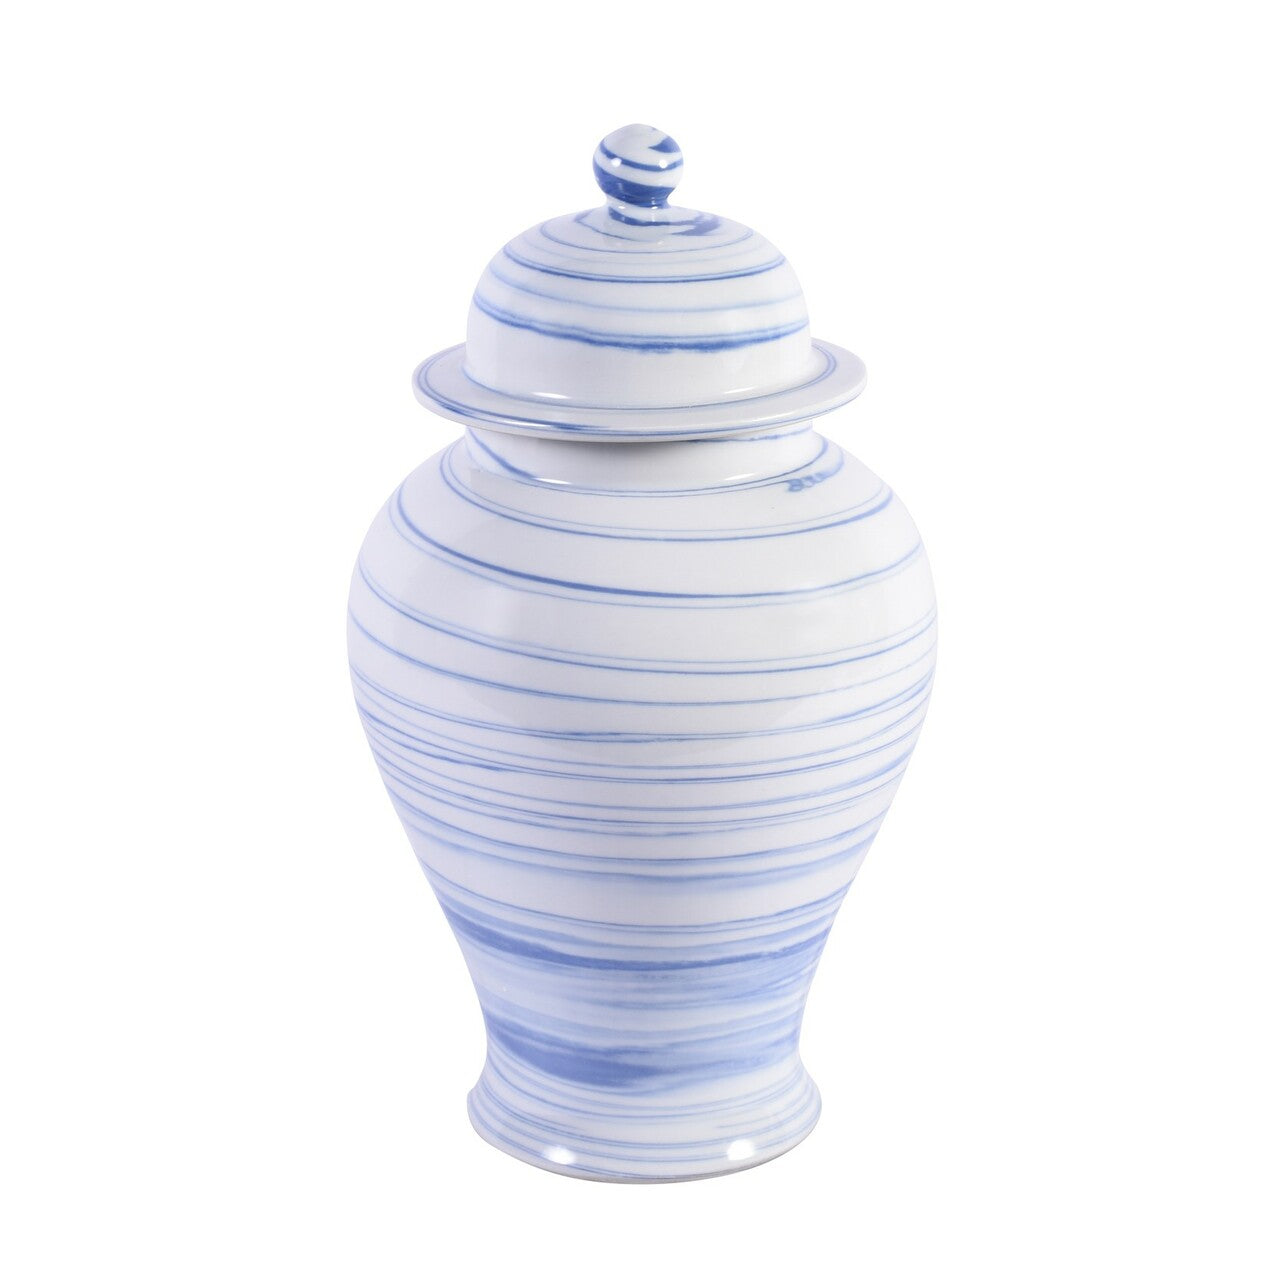 Marbleized Porcelain Temple Jar